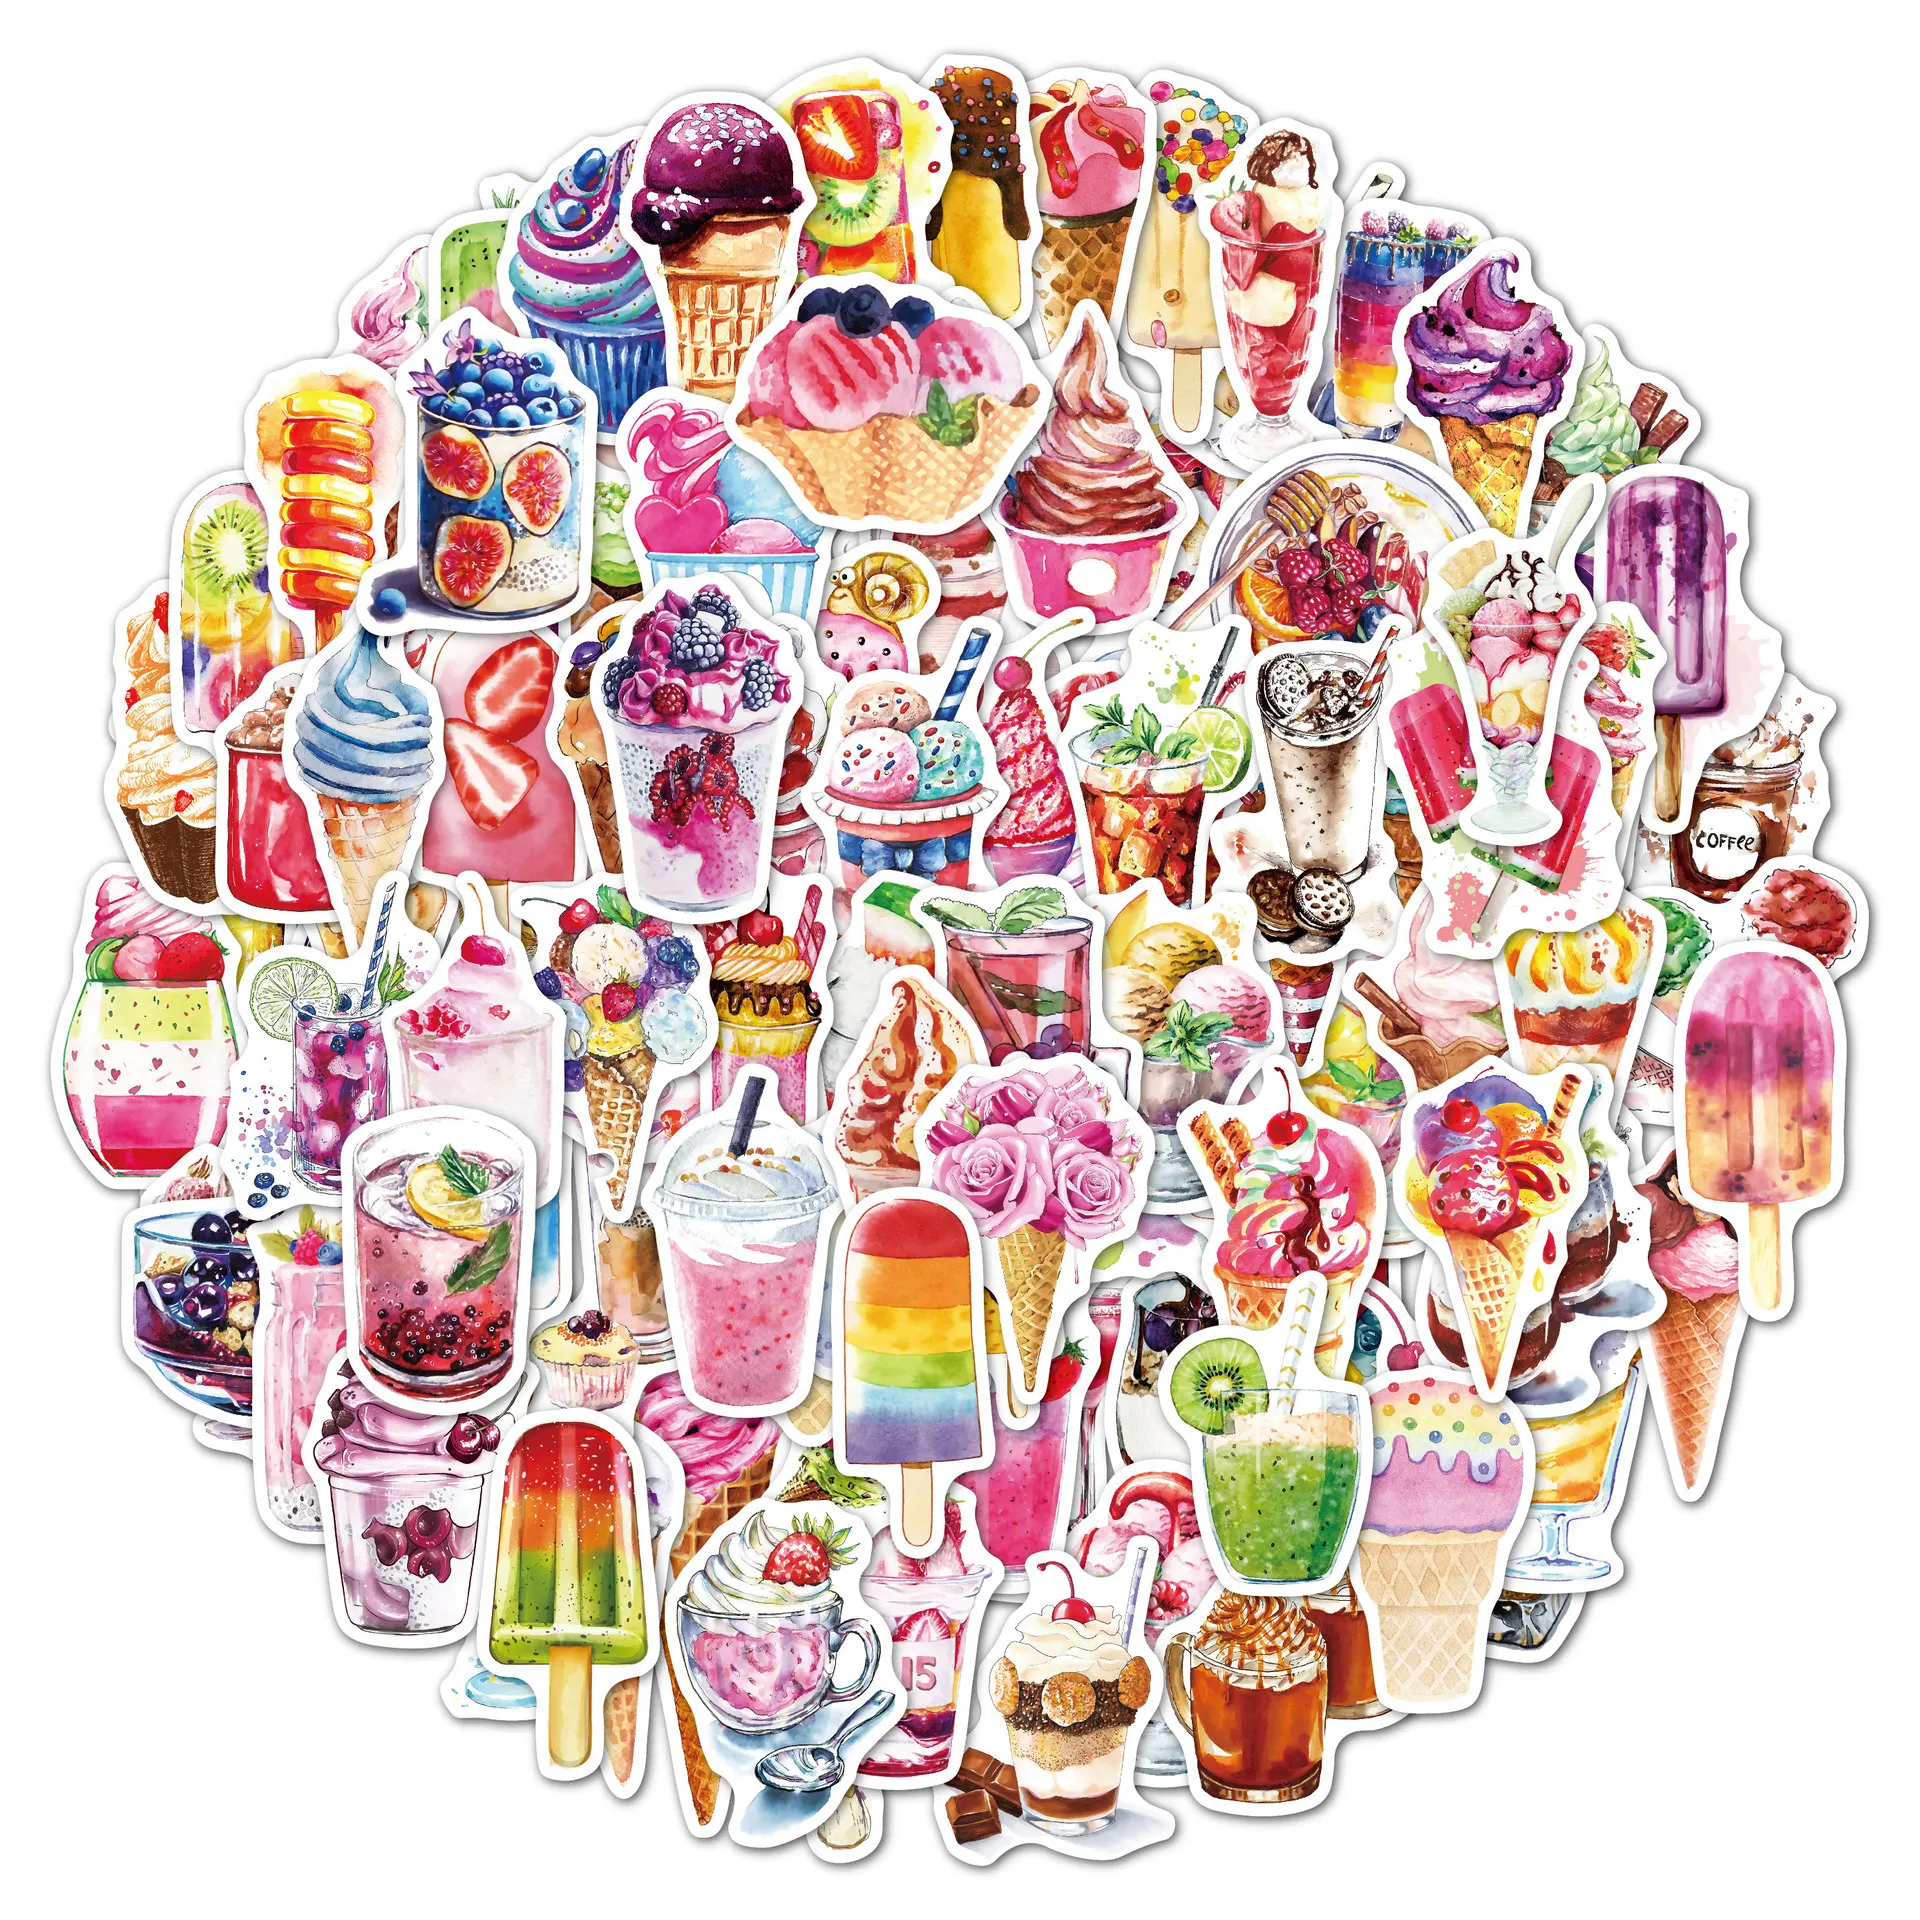 100PCS Food Colorful Kawaii Stickers Ice Cream Cute Stickers Luggage Laptop Phone Waterproof Children Graffiti Sticker Decals